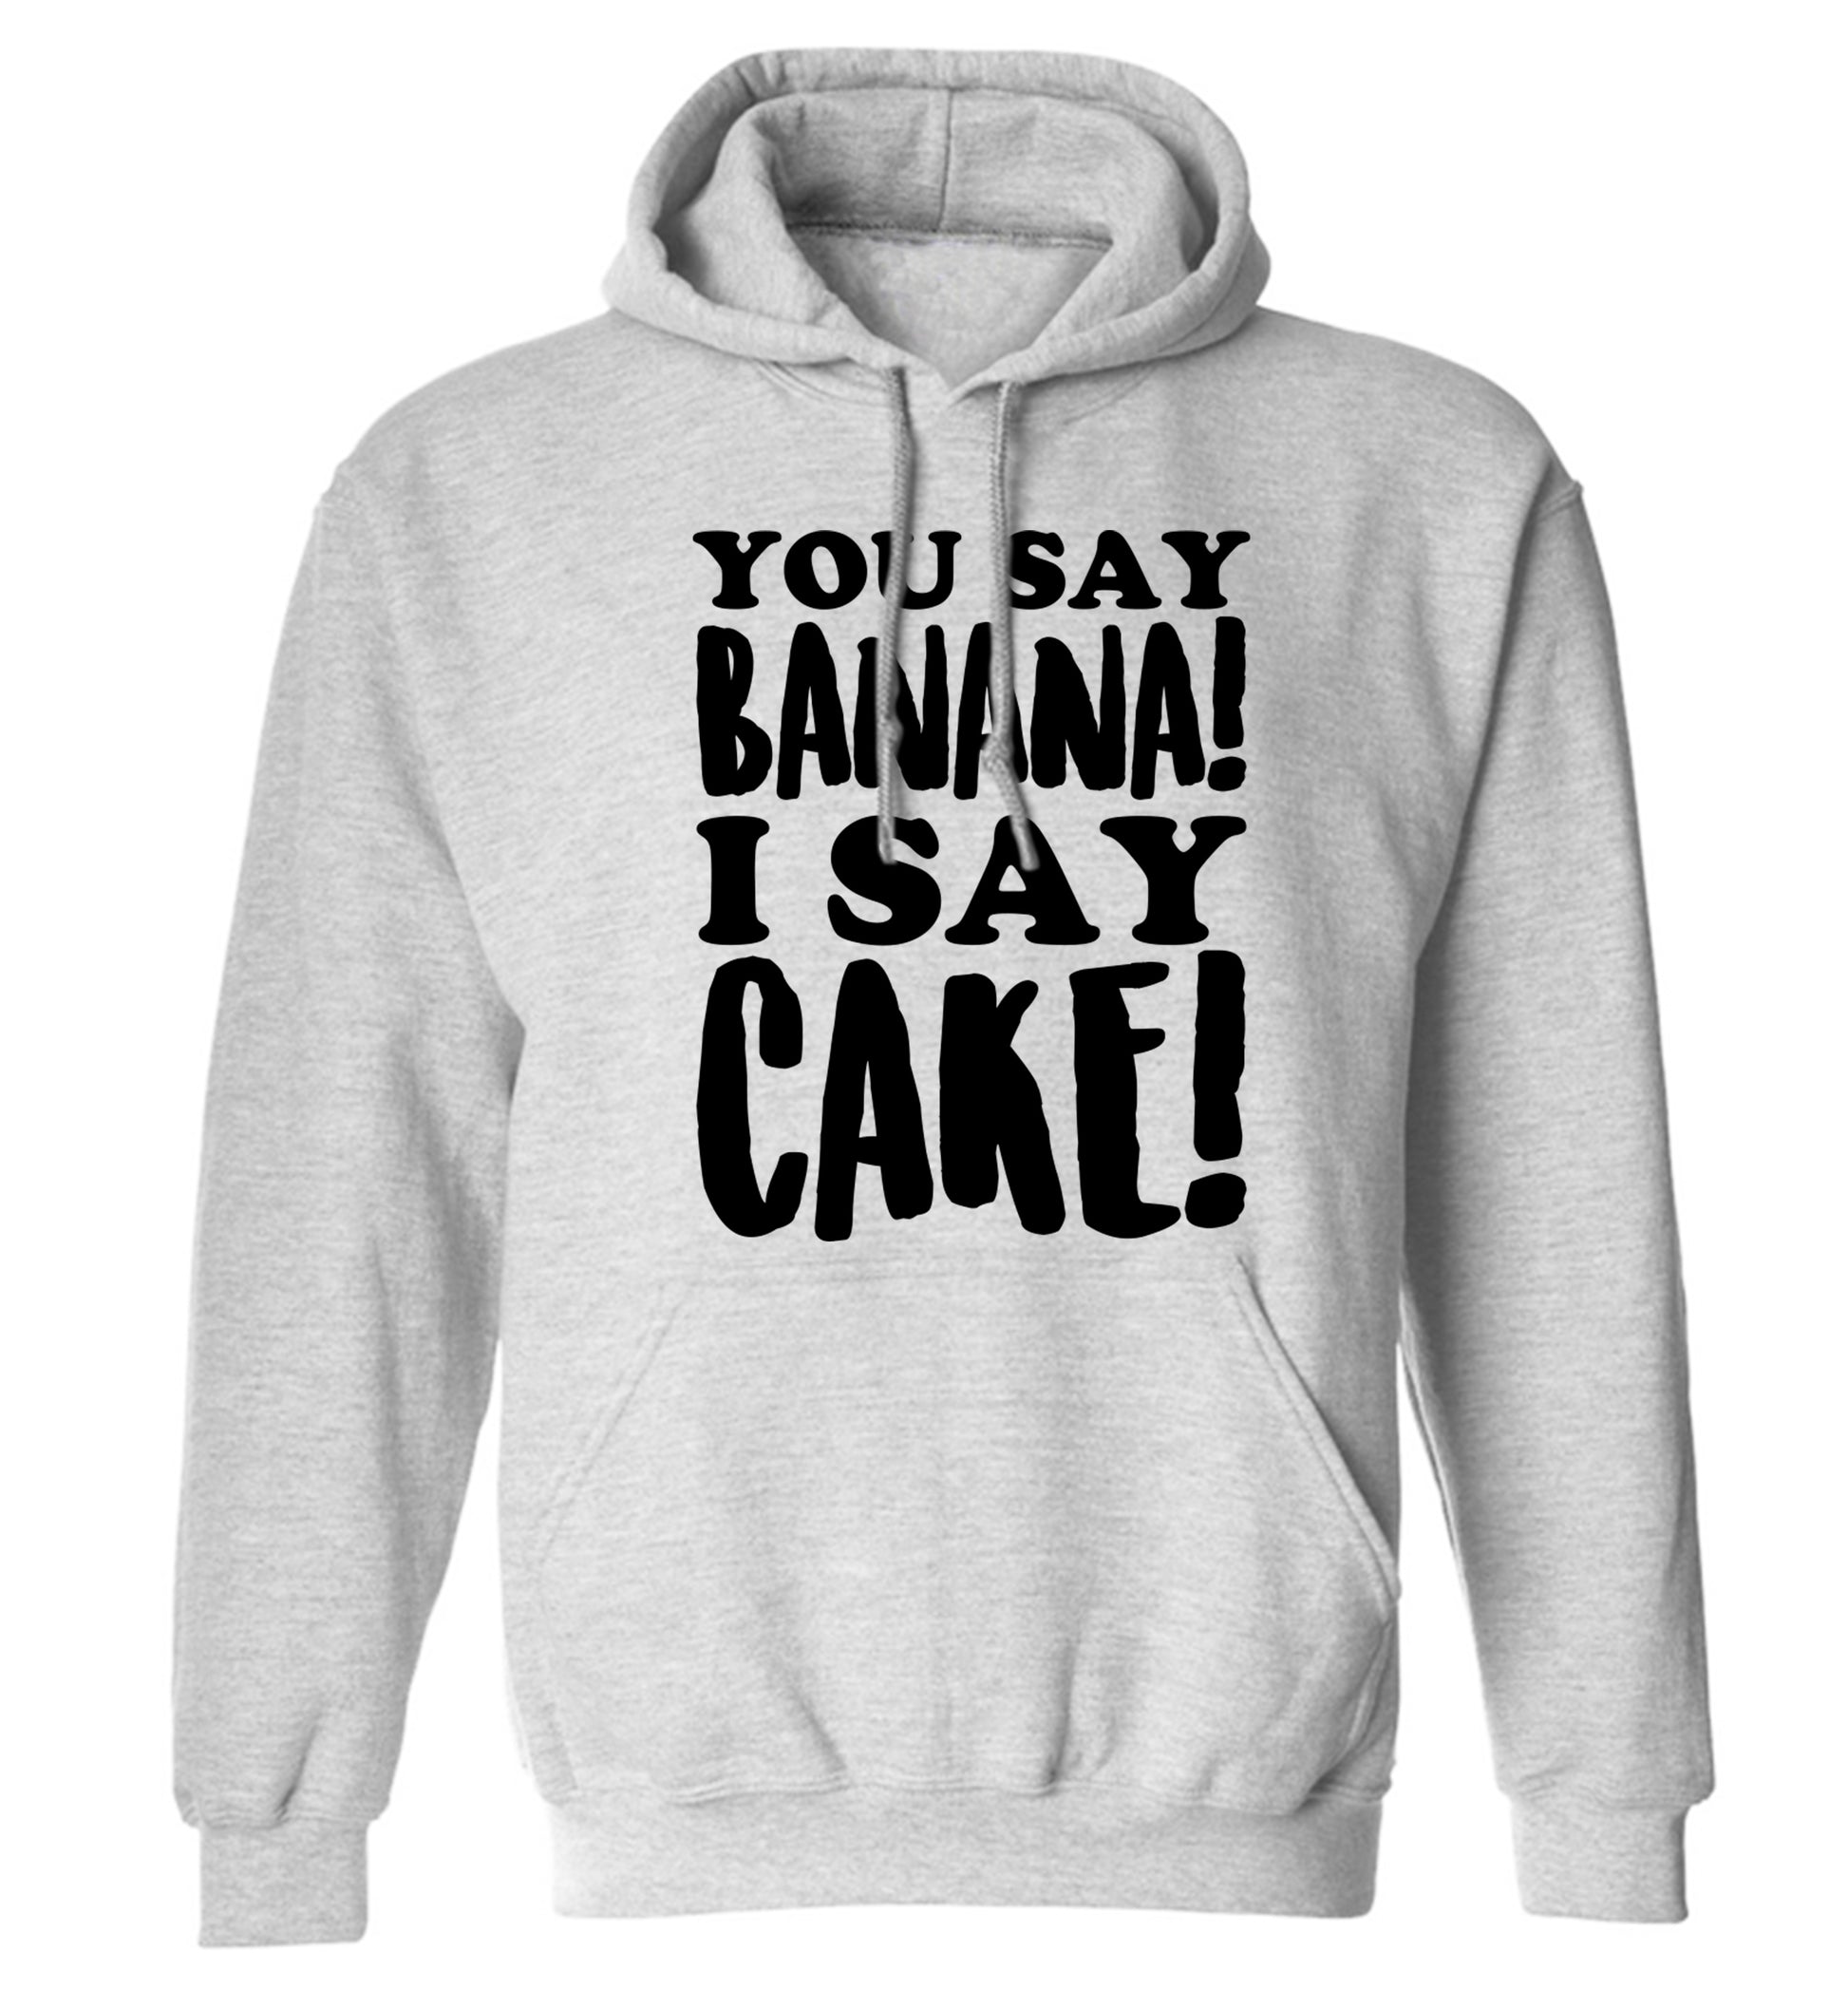 You say banana I say cake! adults unisex grey hoodie 2XL